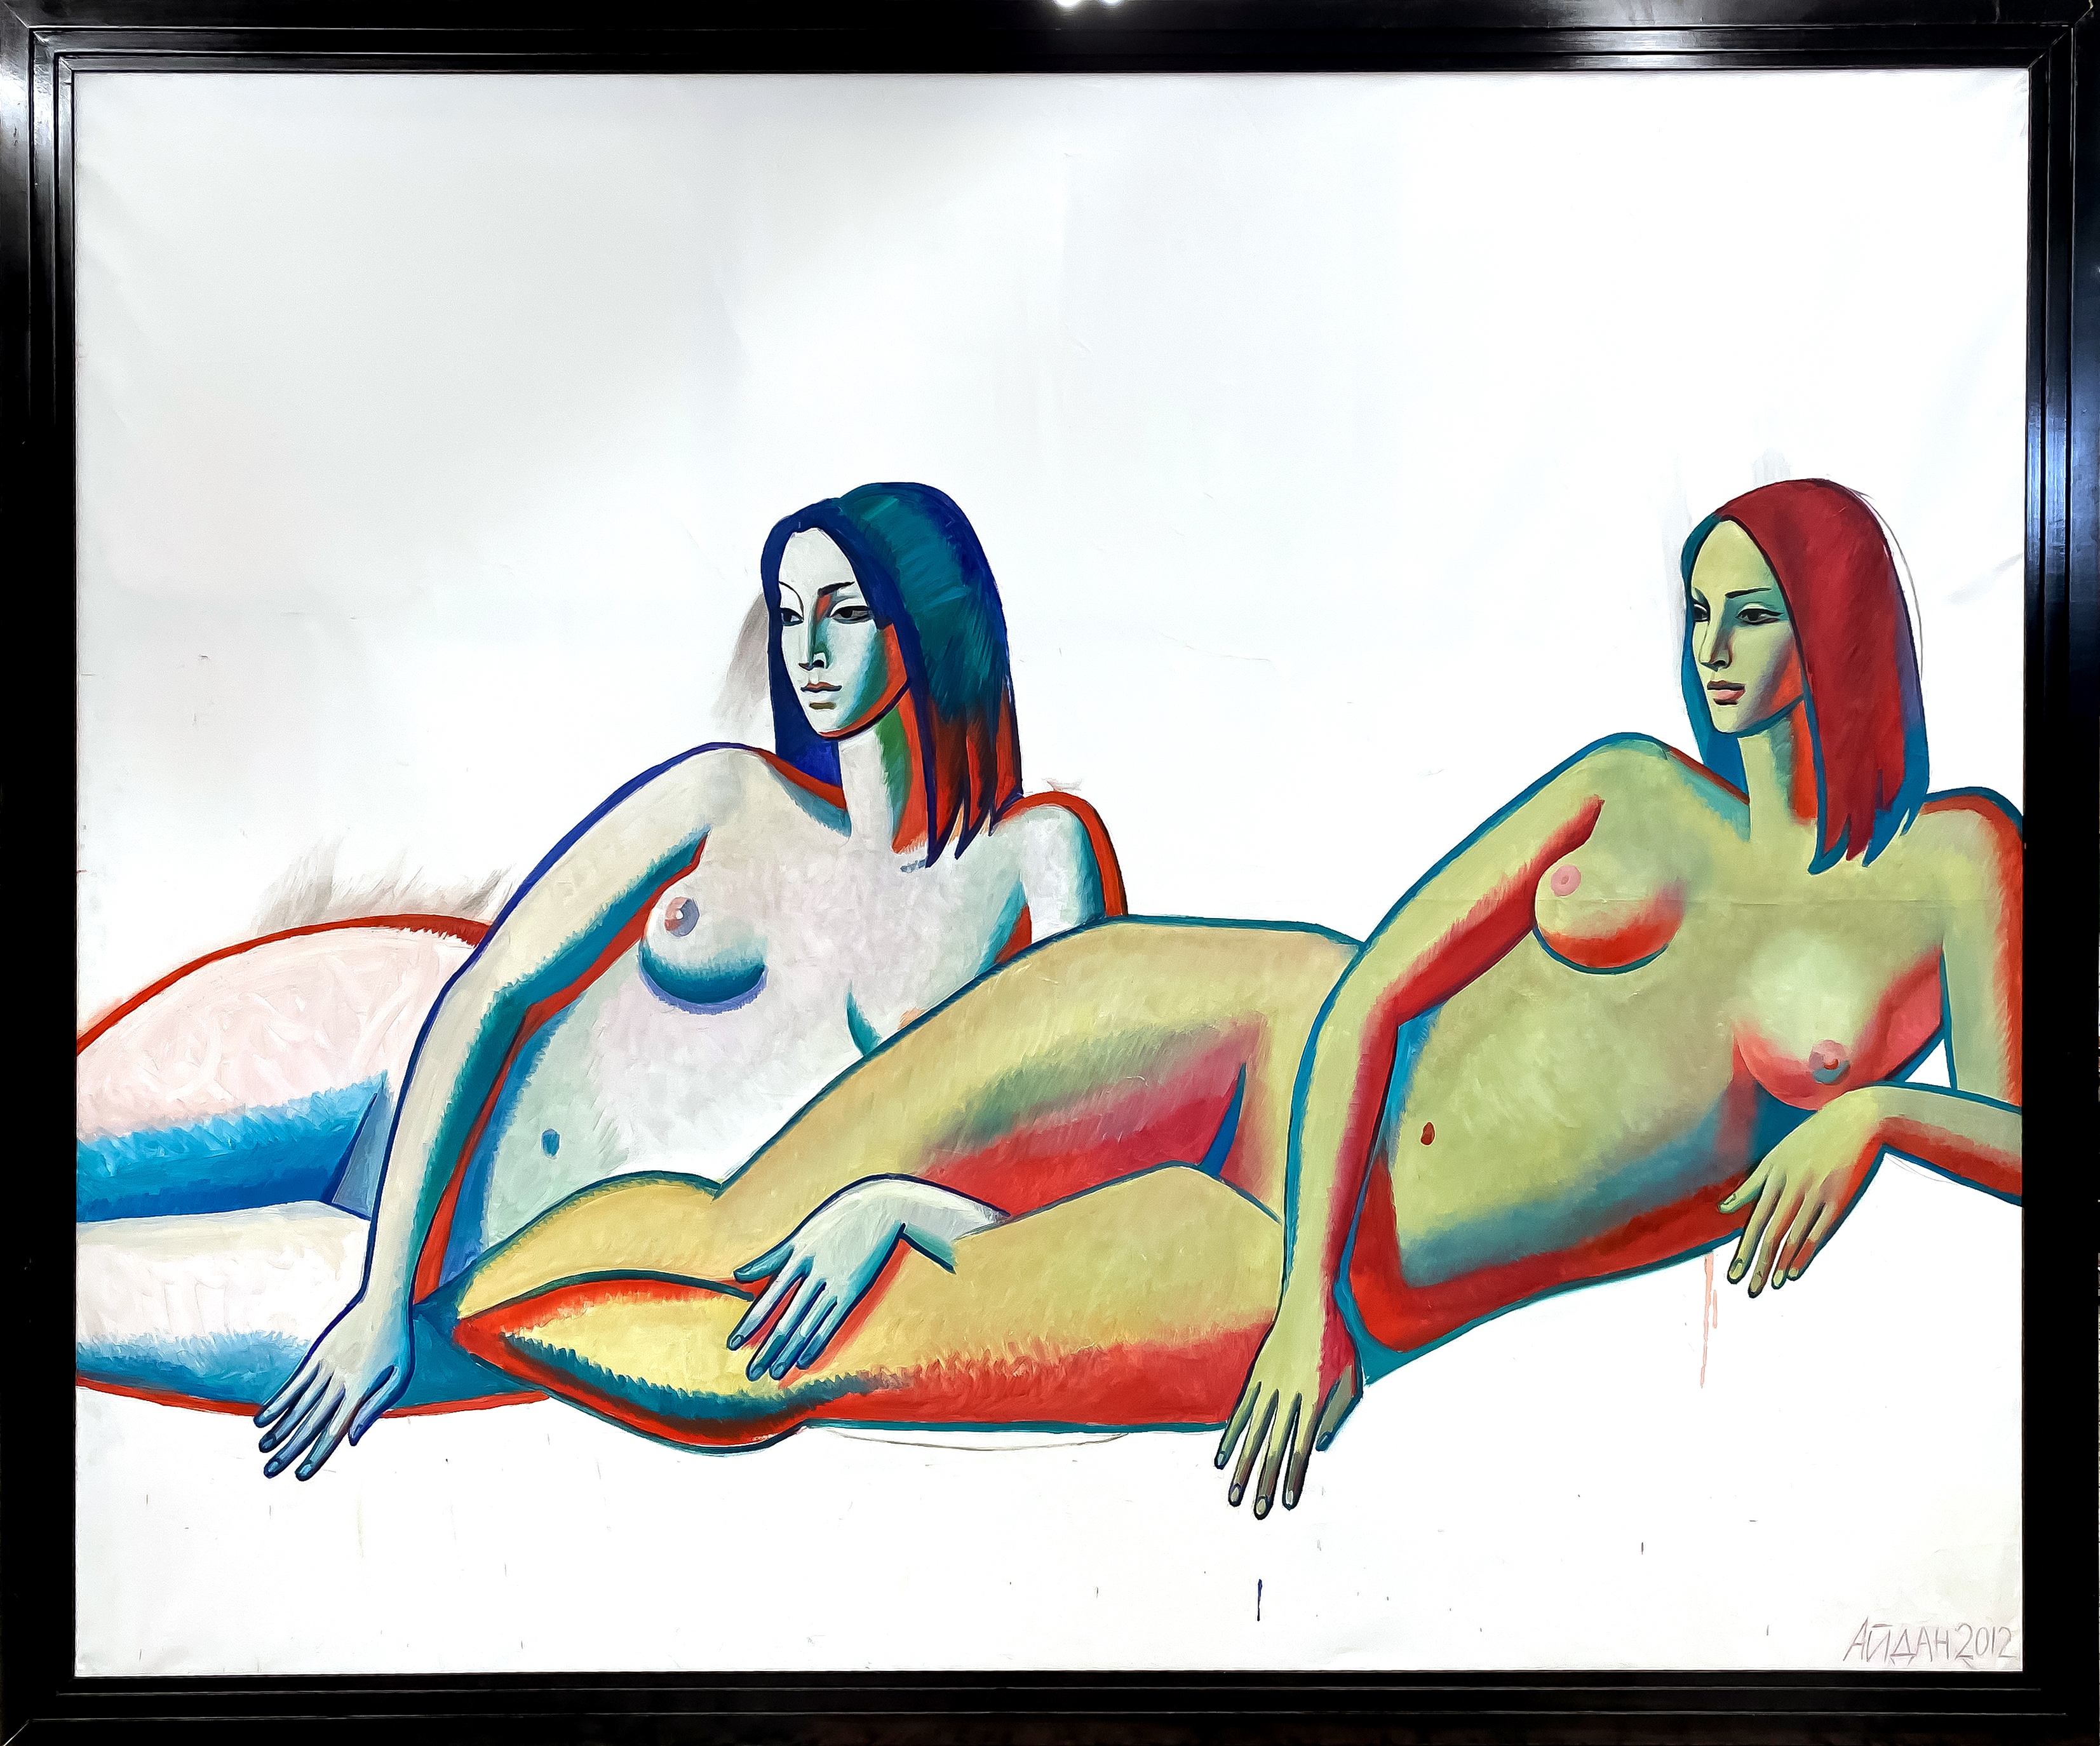 Two lying, weiglichen nudes by Aidan Salakhova, 2012